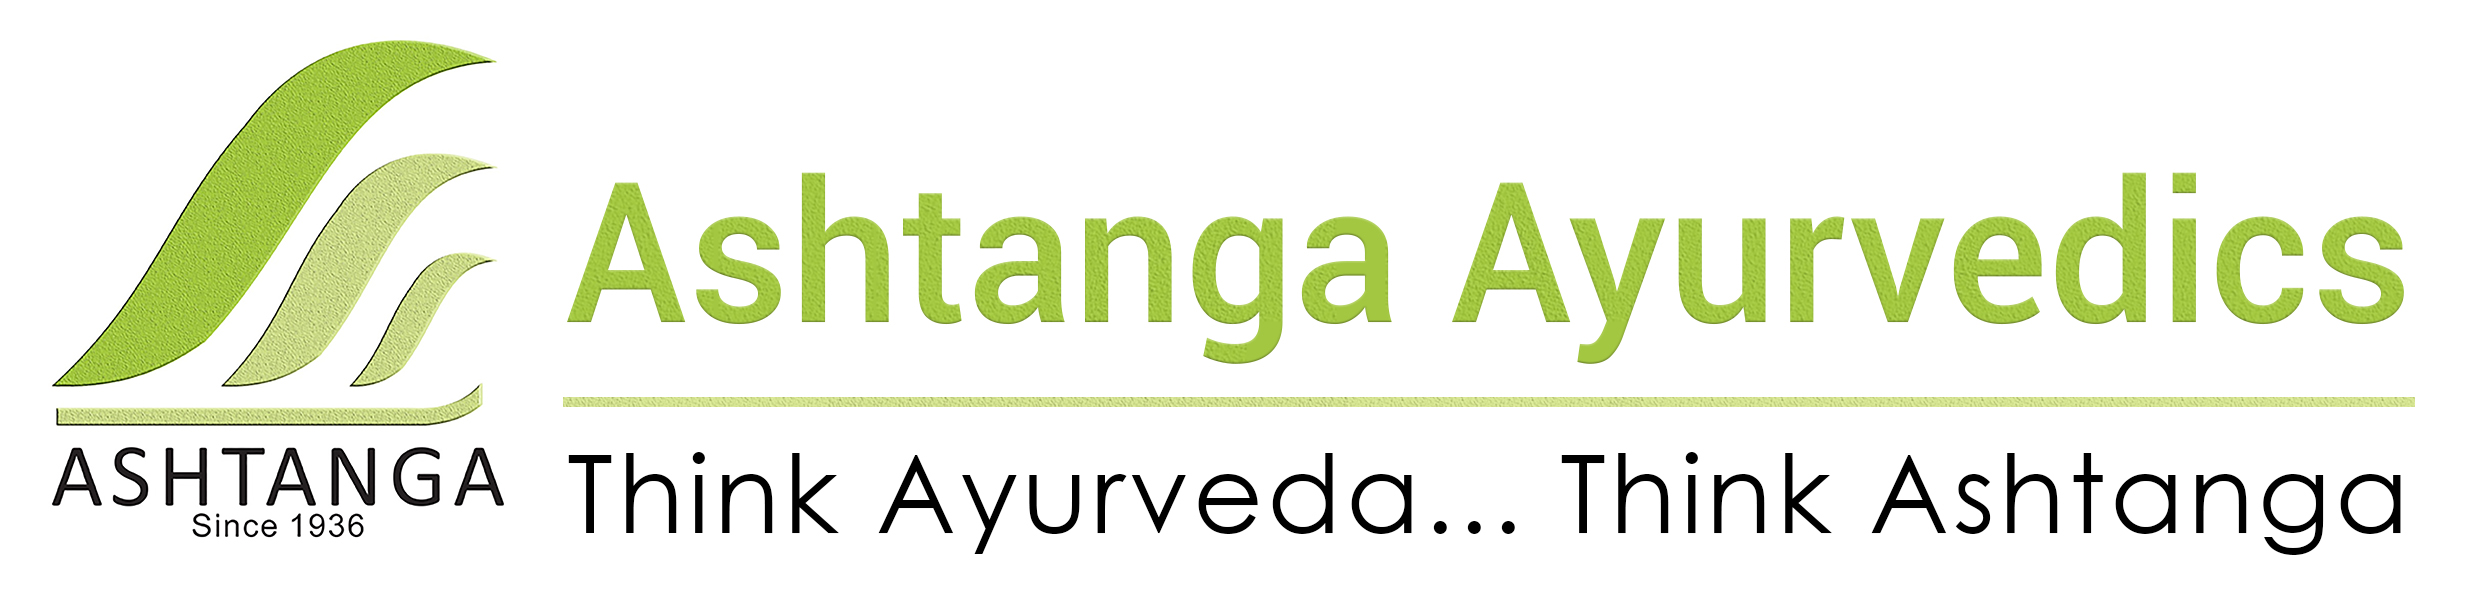 K.S Varier's Ashtanga Ayurvedics Pvt. Ltd